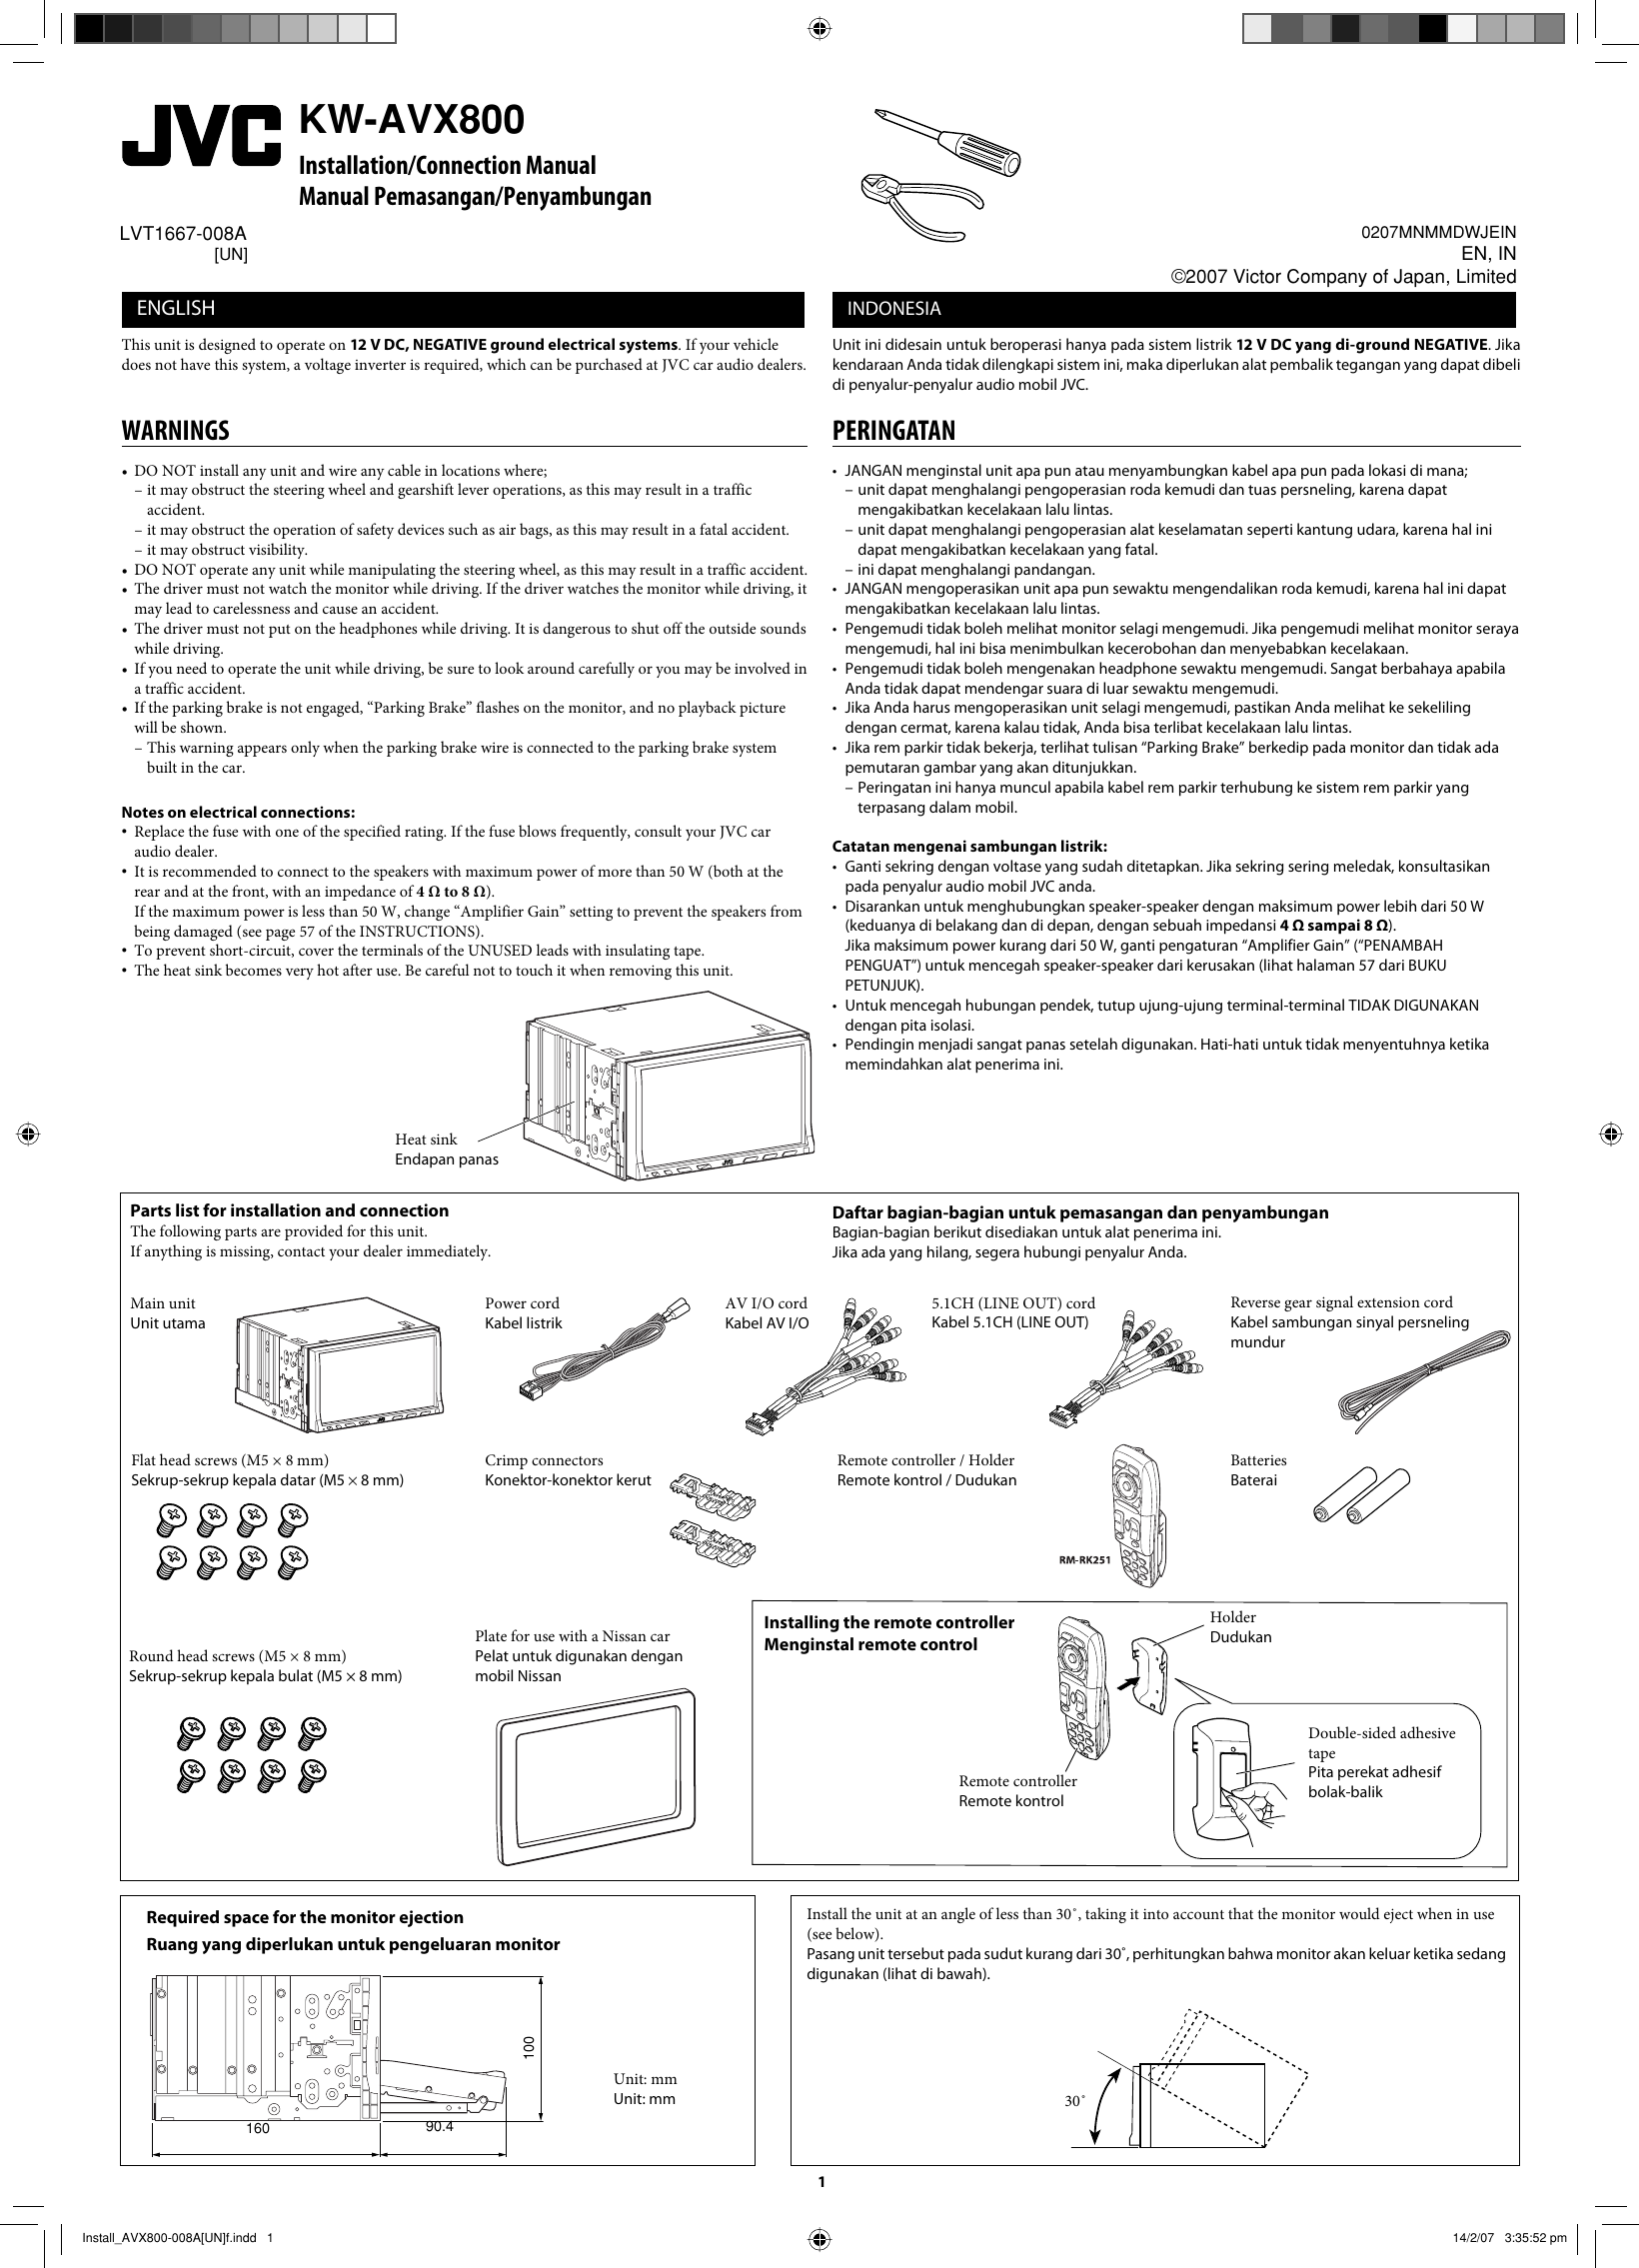 Page 1 of 4 - JVC KW-AVX800UN KW-AVX800[UN] Installation User Manual LVT1667-008A